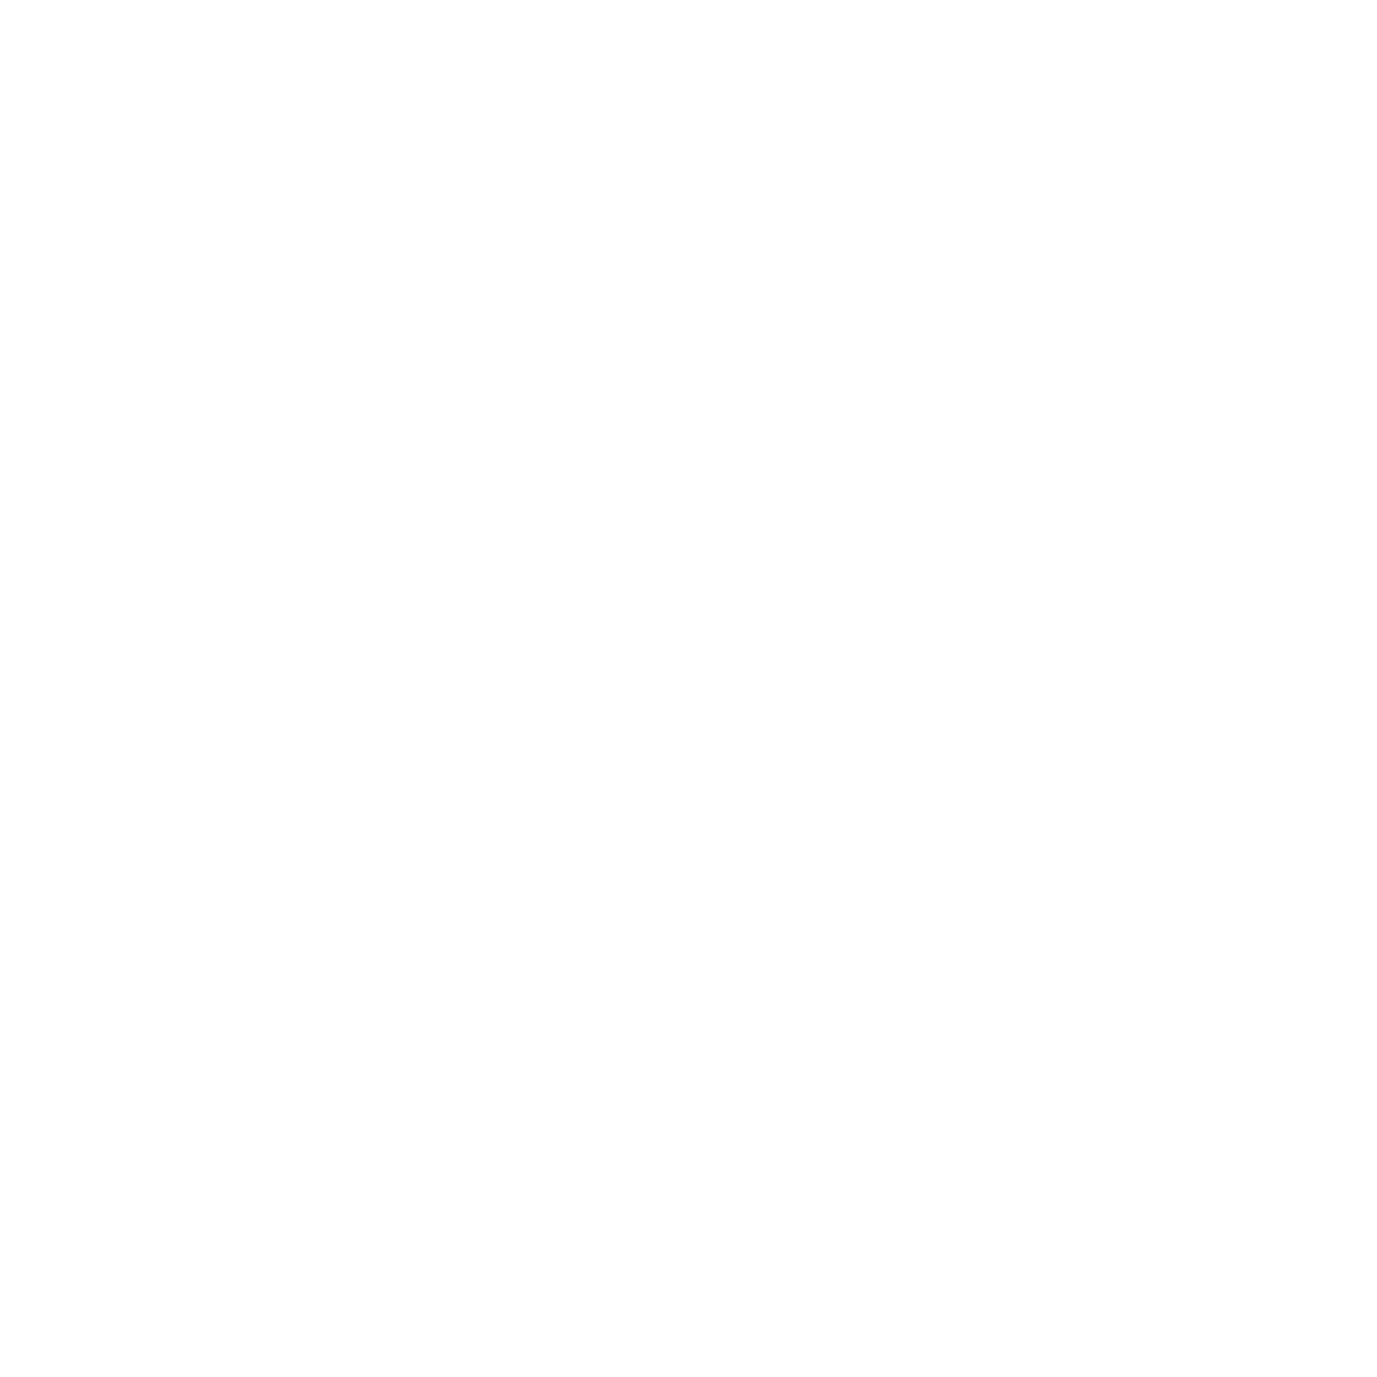 Global Asian Creative Awards